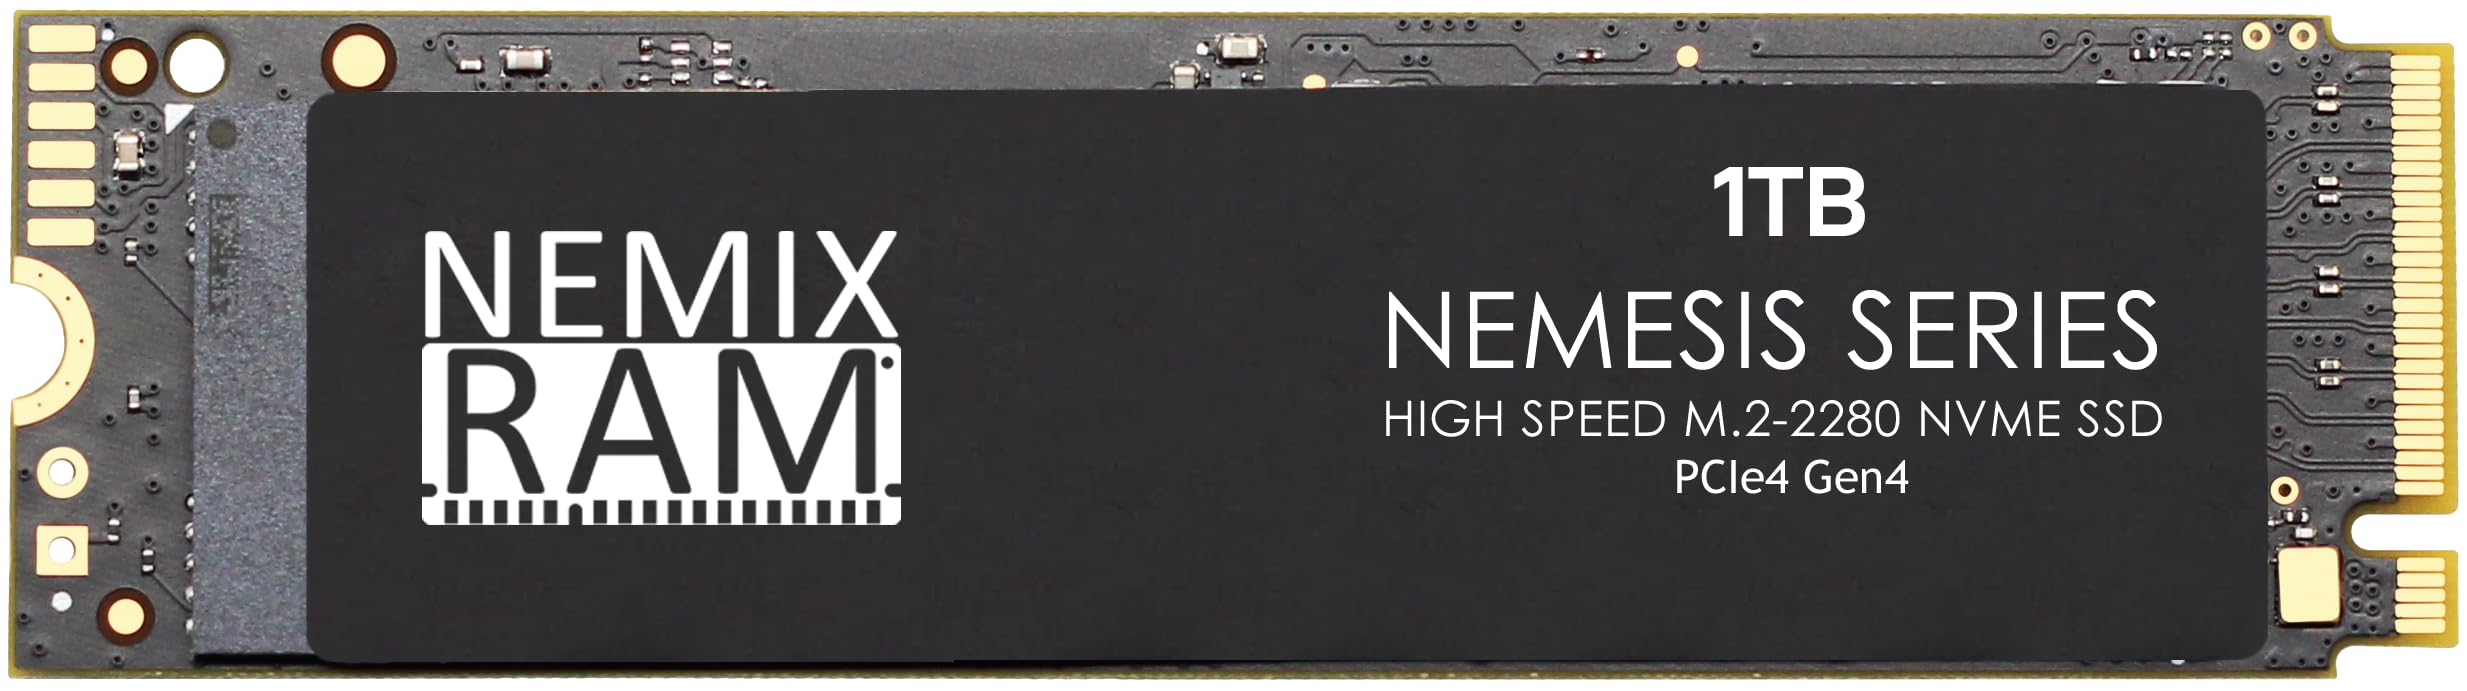 NEMIX RAM Nemesis Series 1TB M.2 2280 Gen4 PCIe NVMe SSD Write Speeds up to 7415mbps Compatible with Dell Precision 7680 Mobi